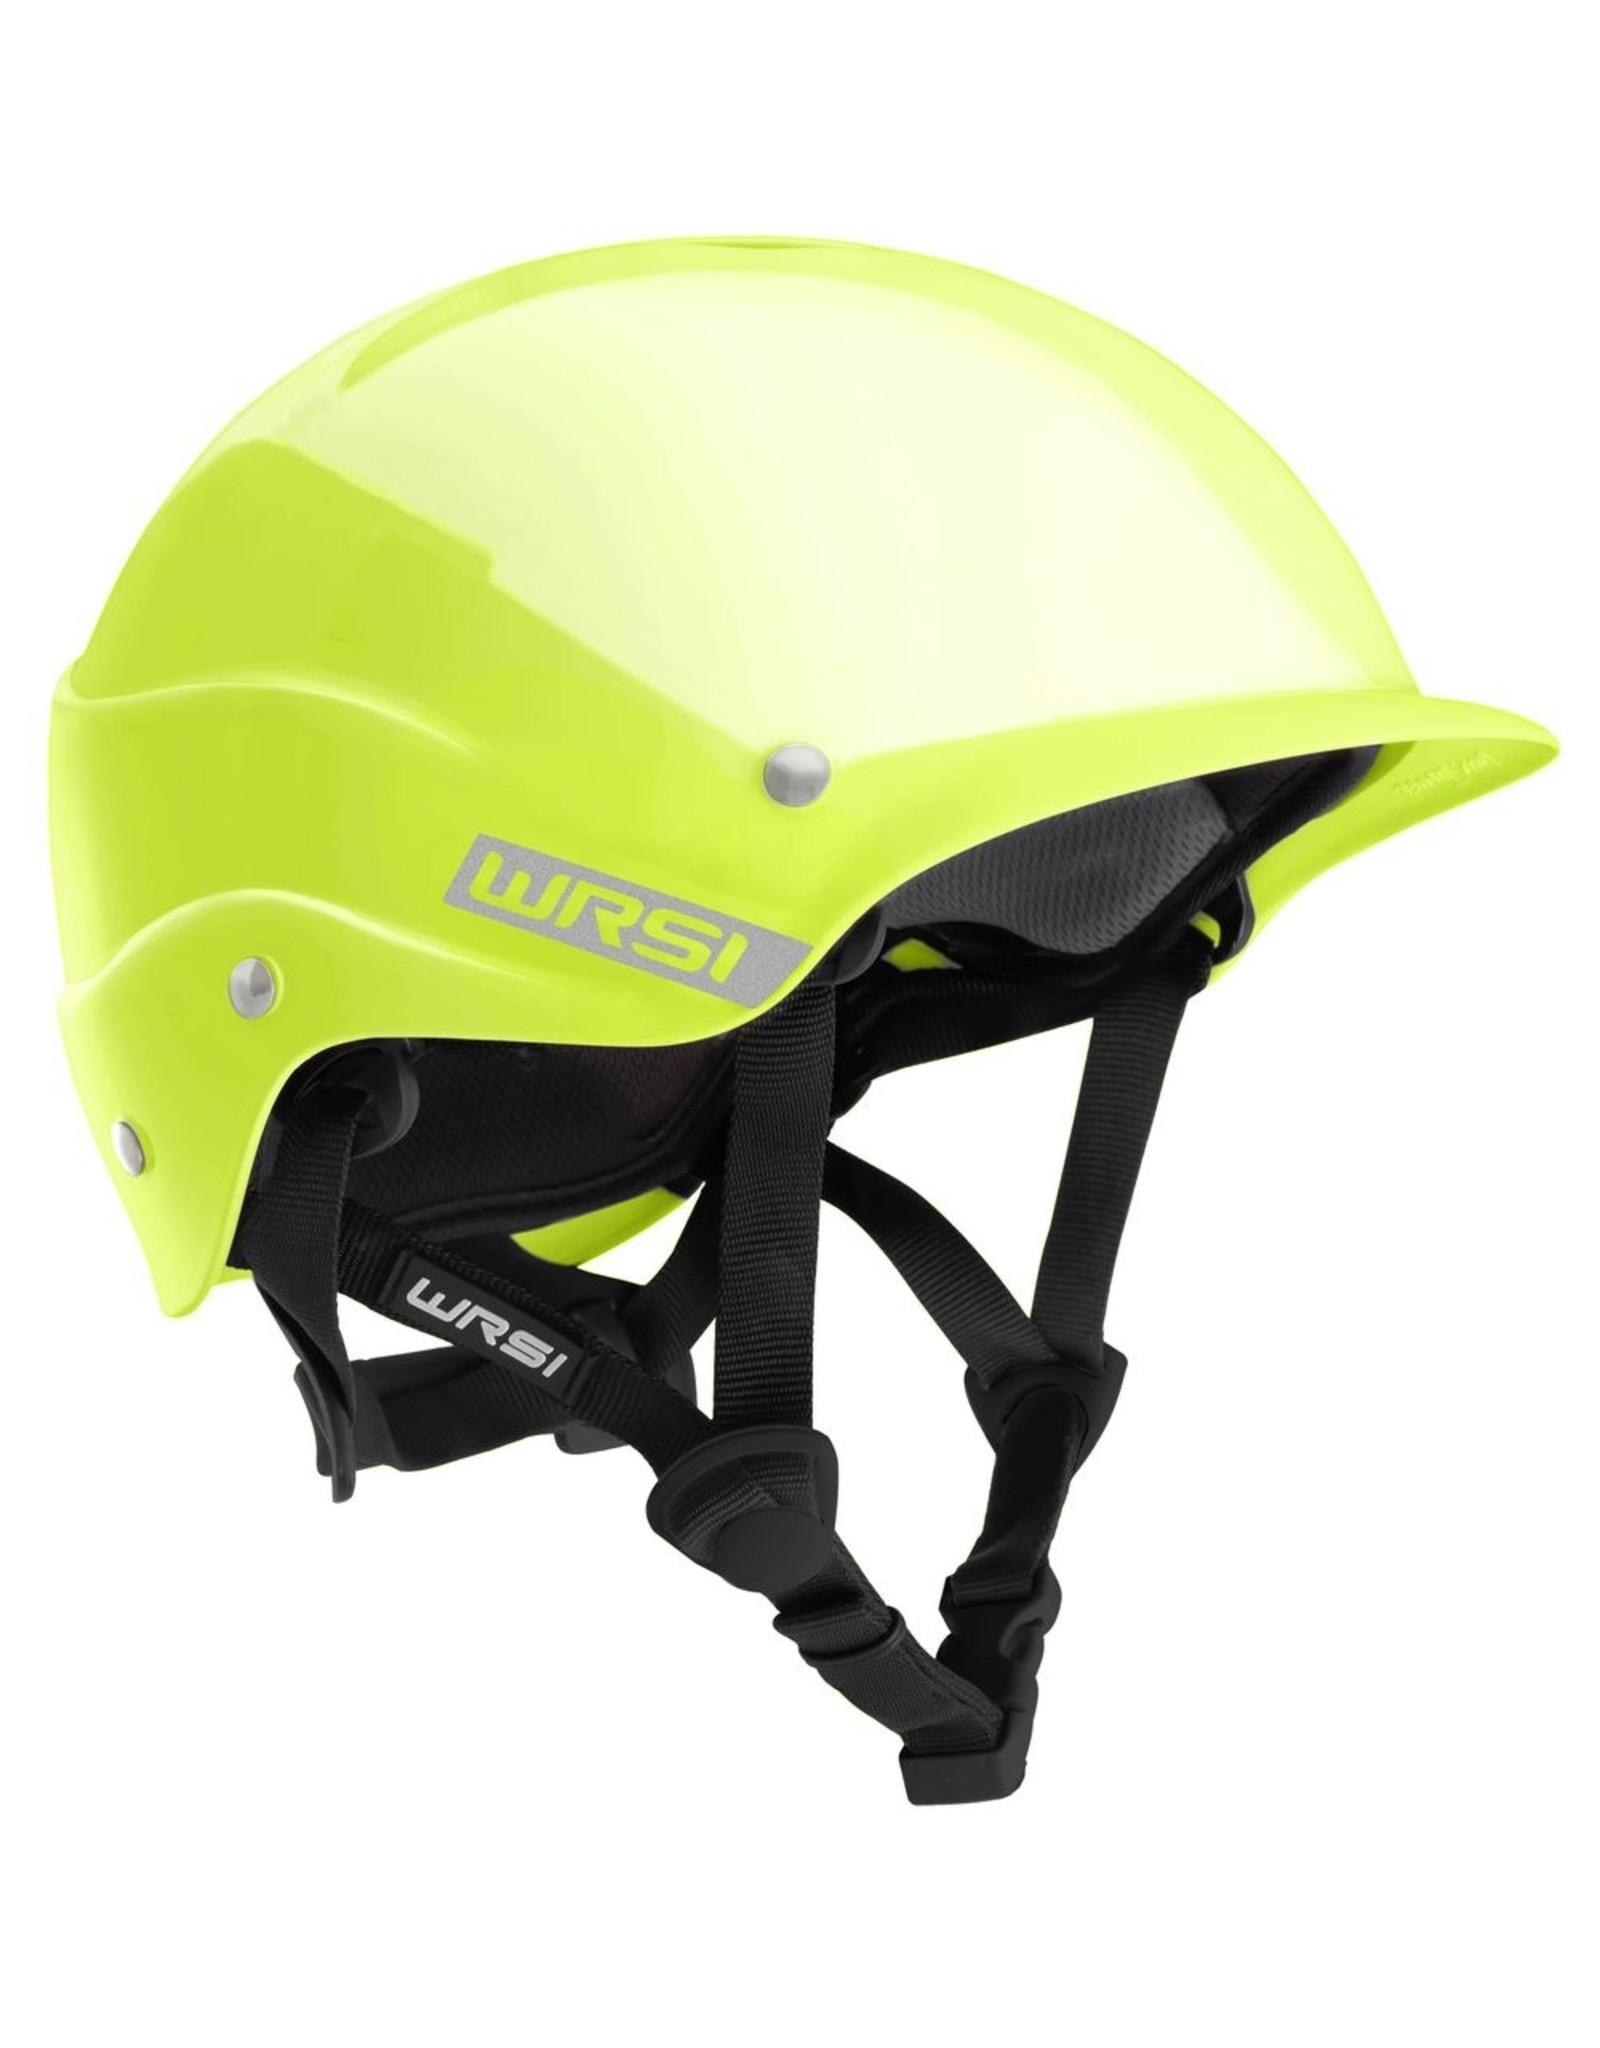 WRSI WRSI Current Helmet